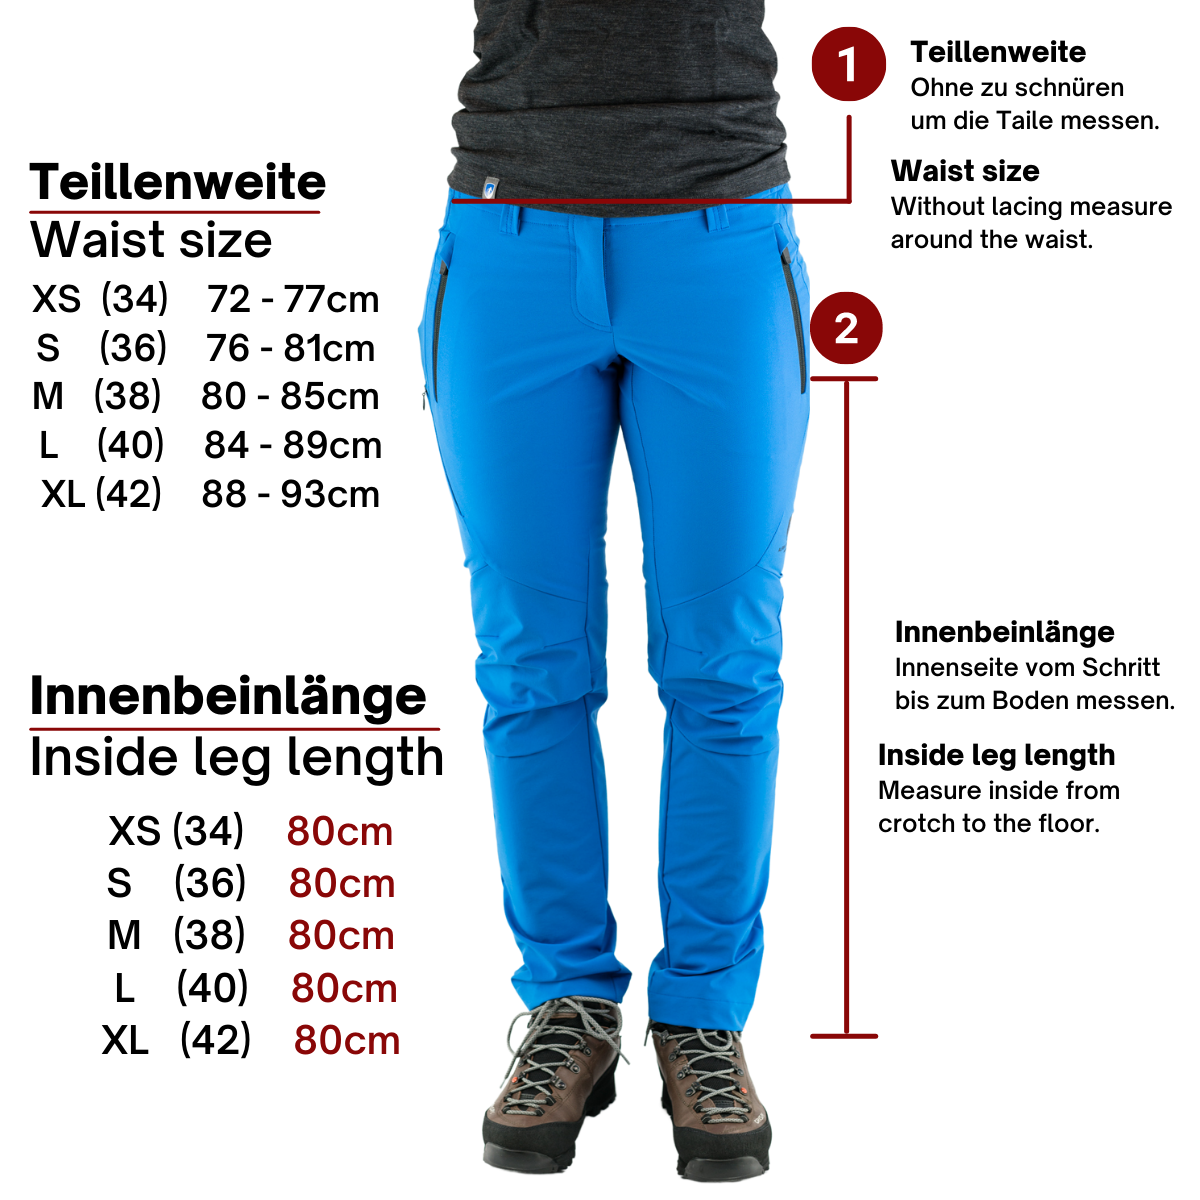 Women's hiking pants size table